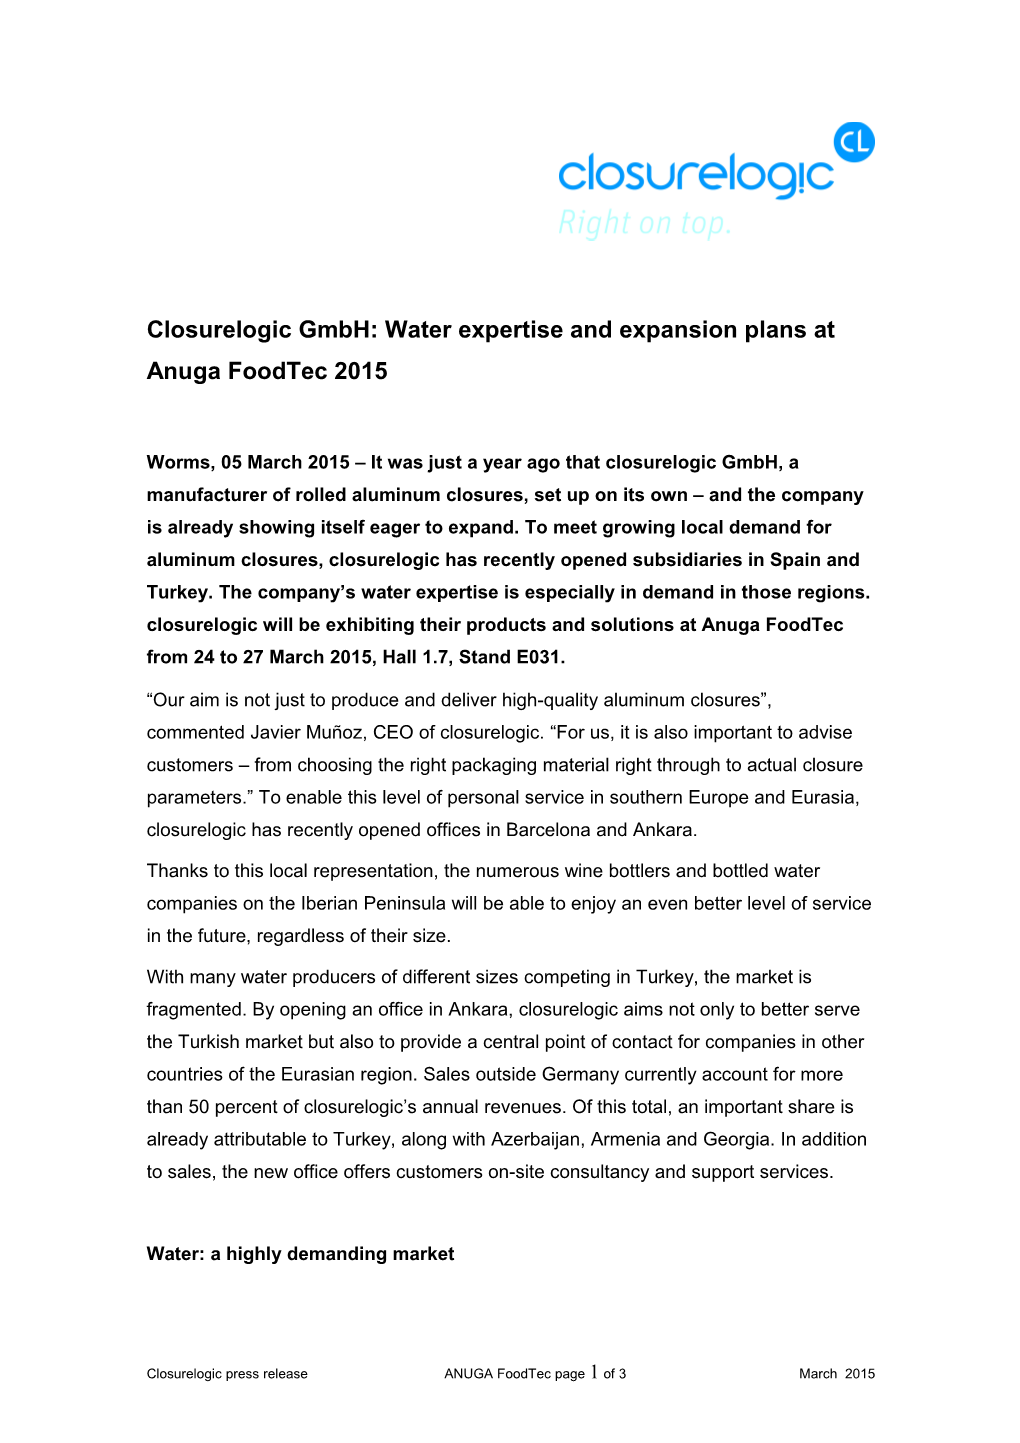 Closurelogic Gmbh:Water Expertise and Expansion Plans at Anuga Foodtec 2015